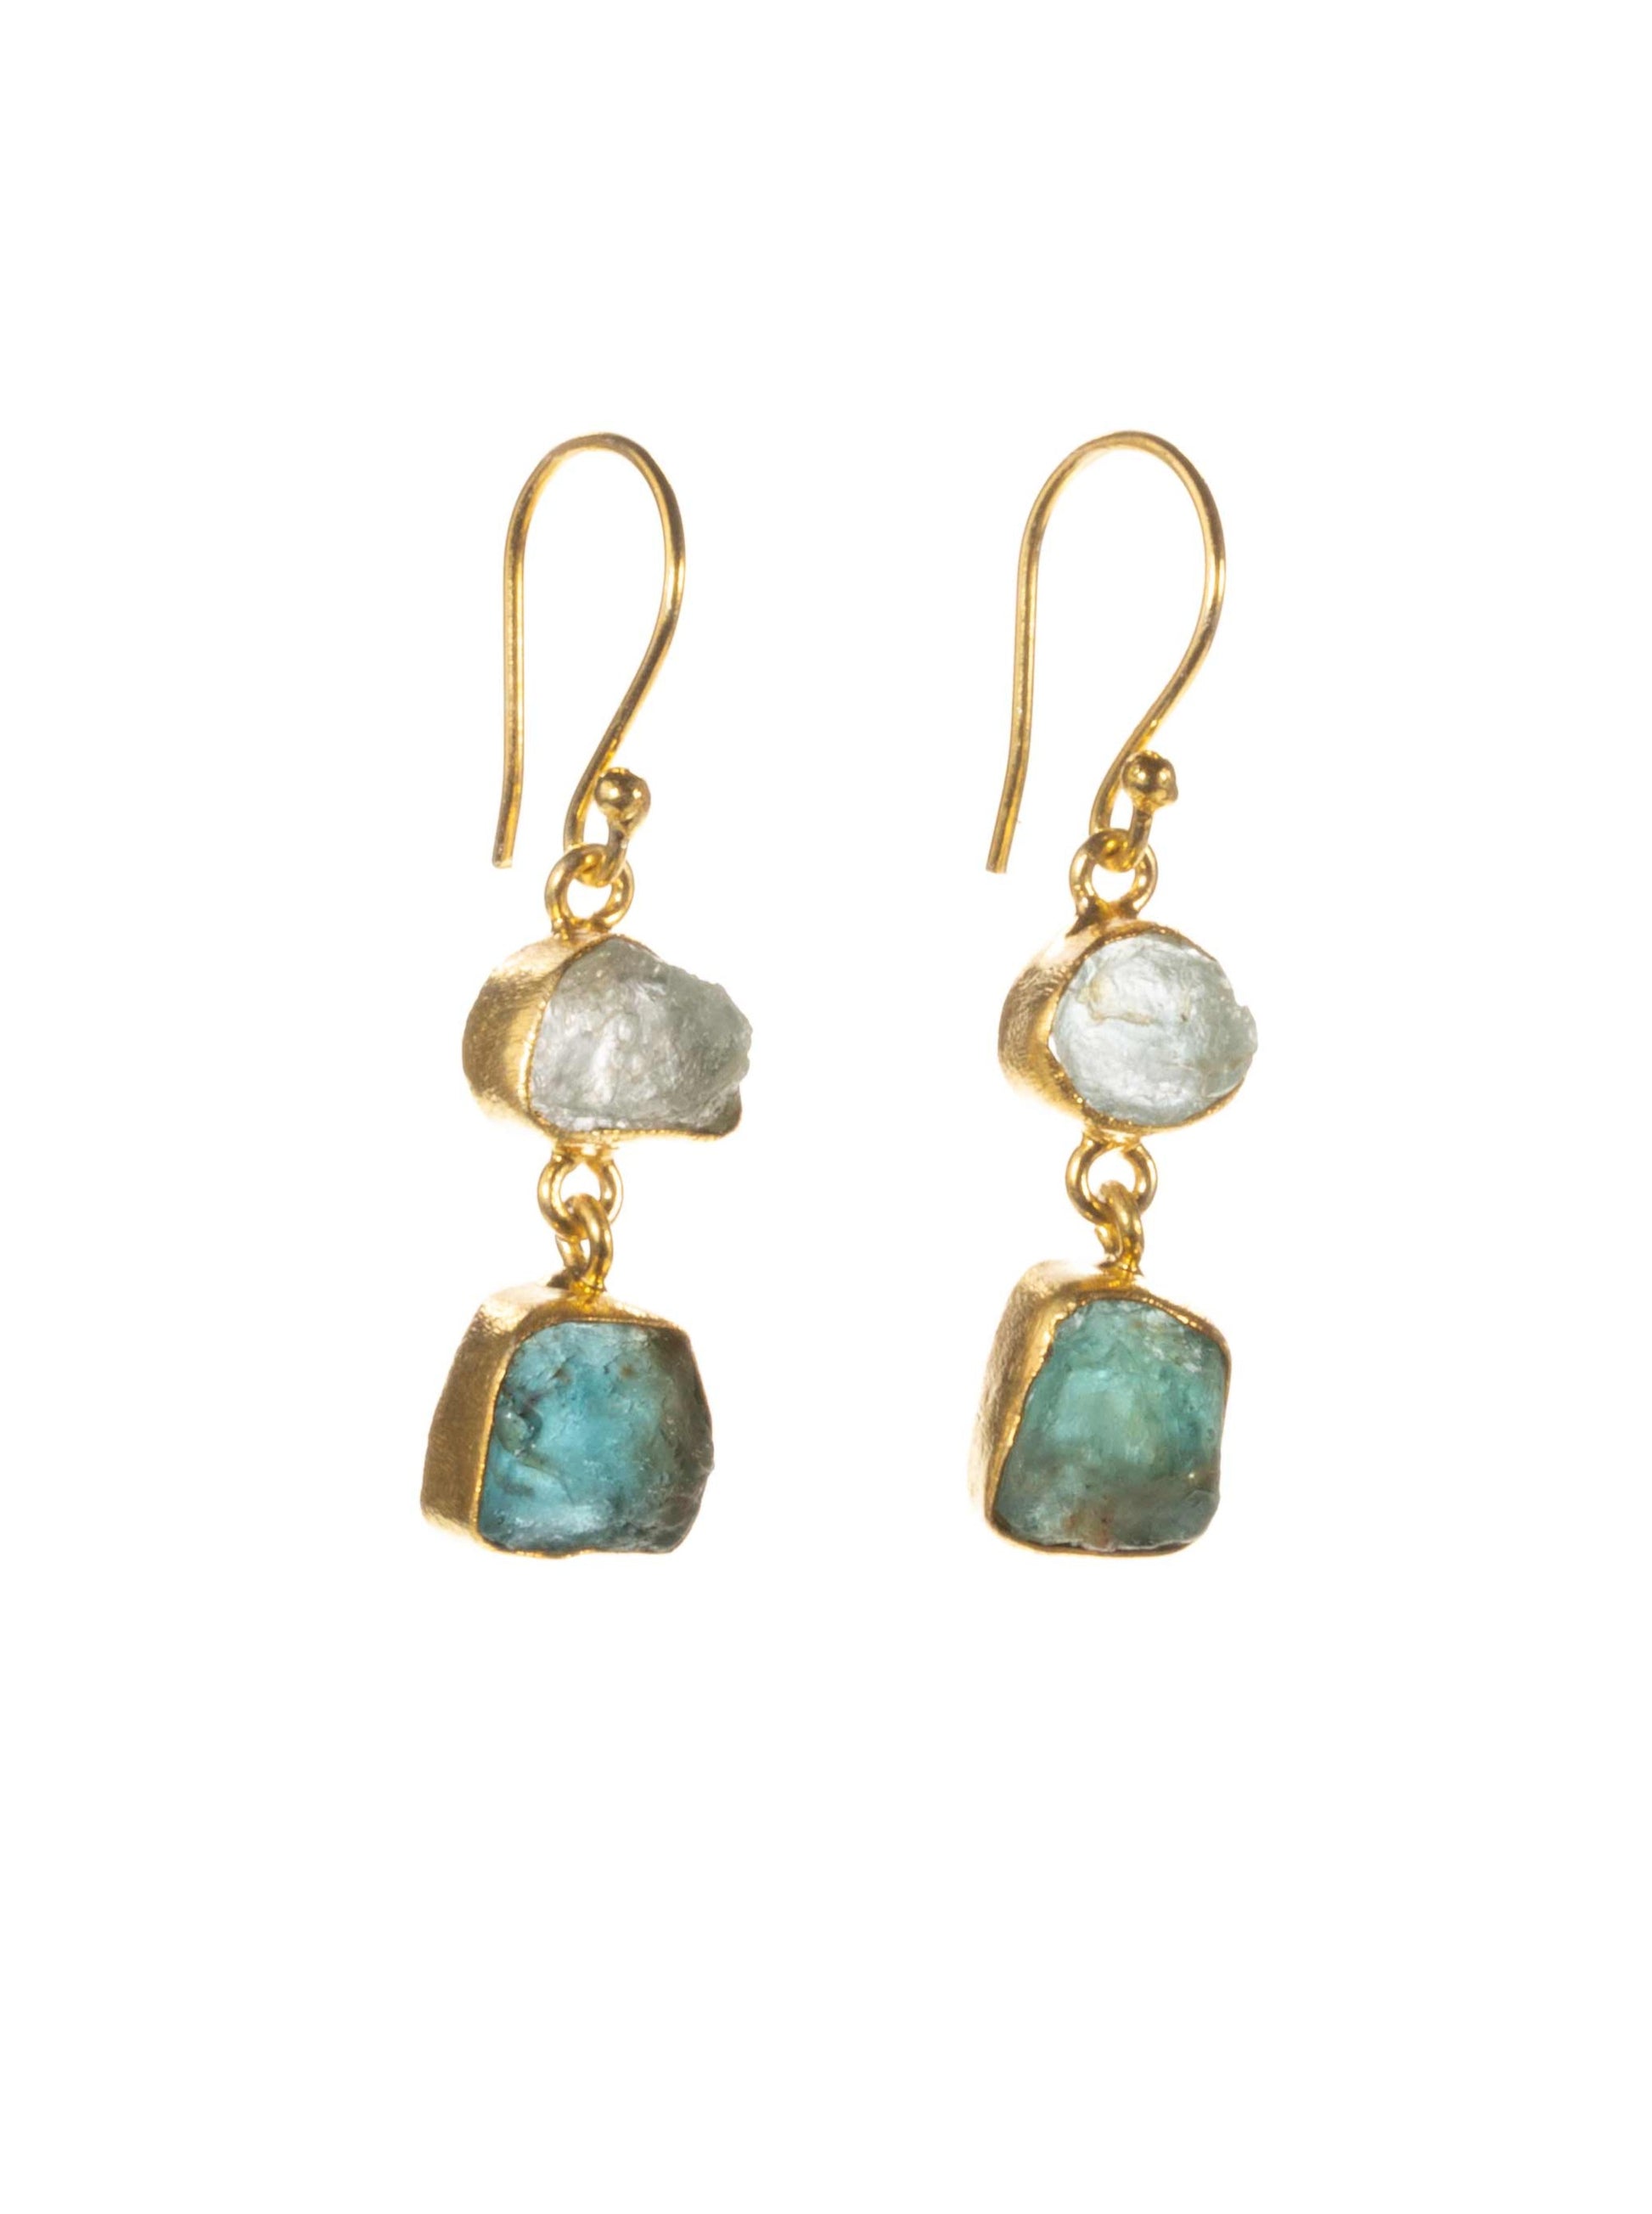 Gold Luxe earrings - aqua marine and sky apatite double drop dangles